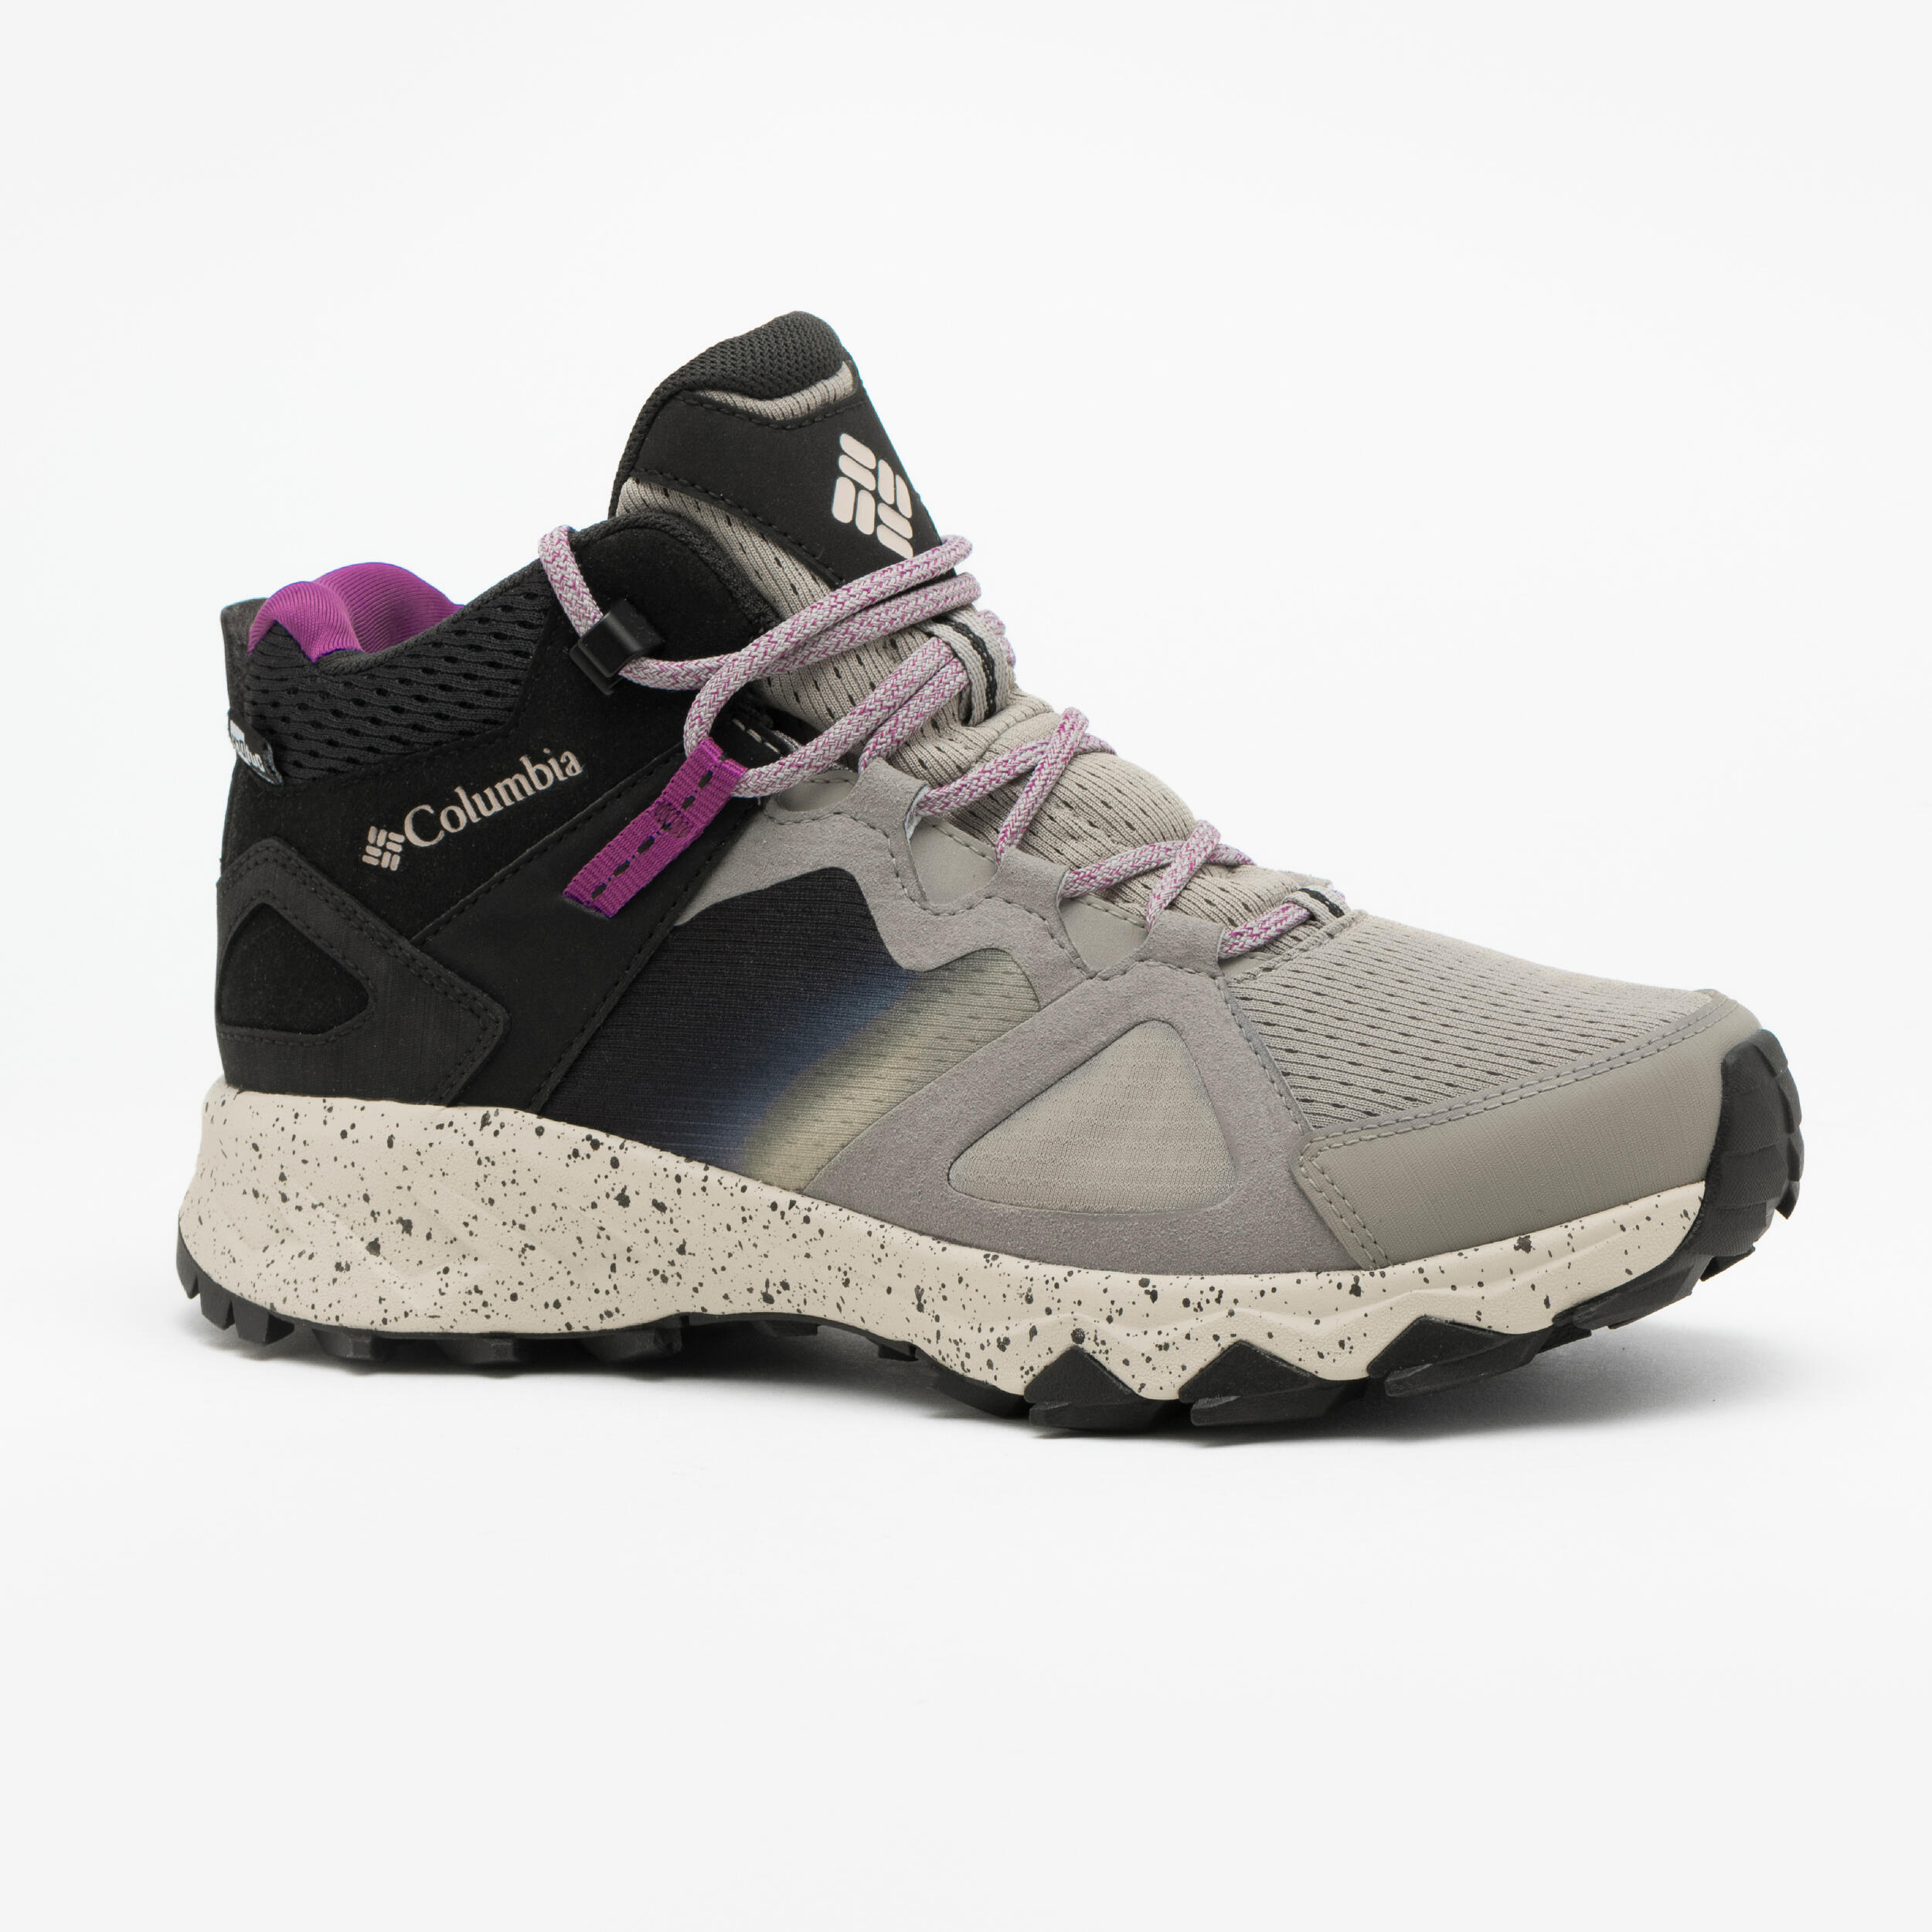 Women's Hiking Waterproof Shoes - Columbia Hera Mid Outdry 1/4